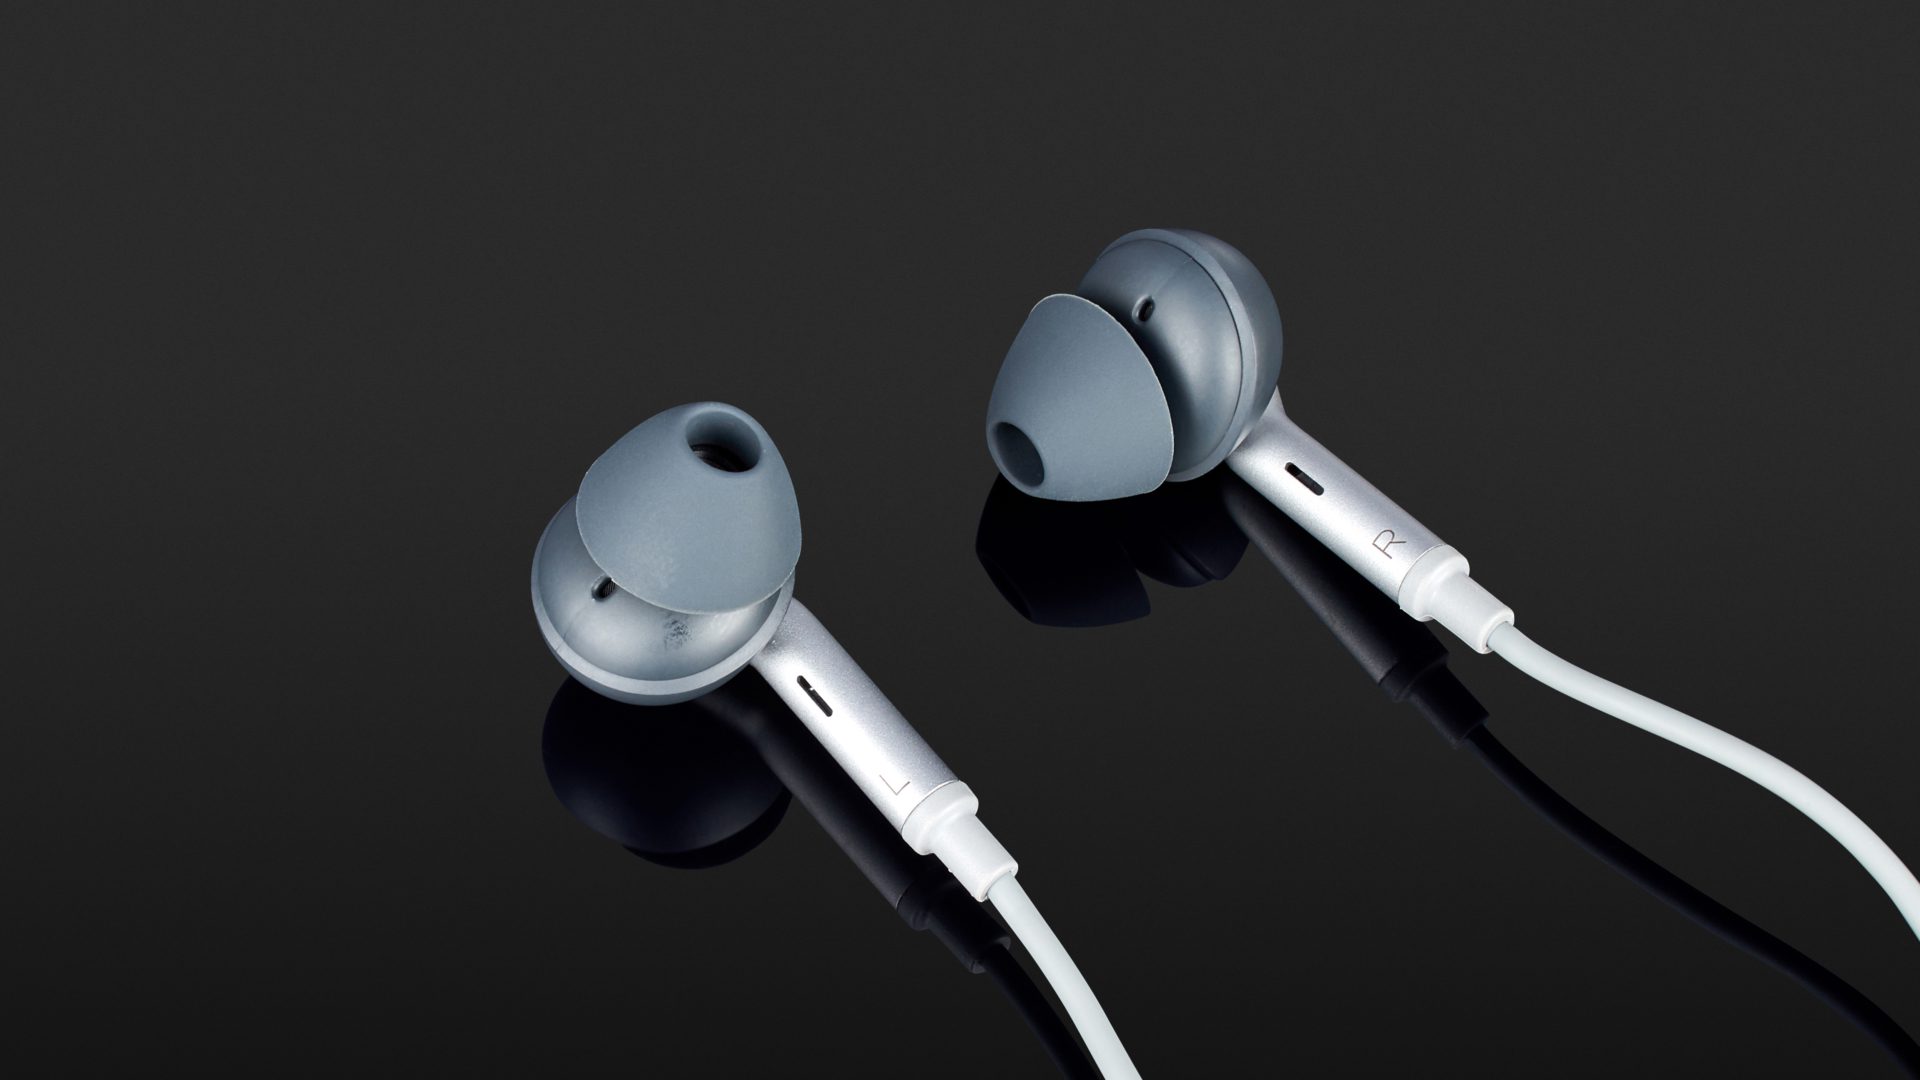 Test: Libratone Q Adapt drahtloser On-Ear Kopfhörer mit 